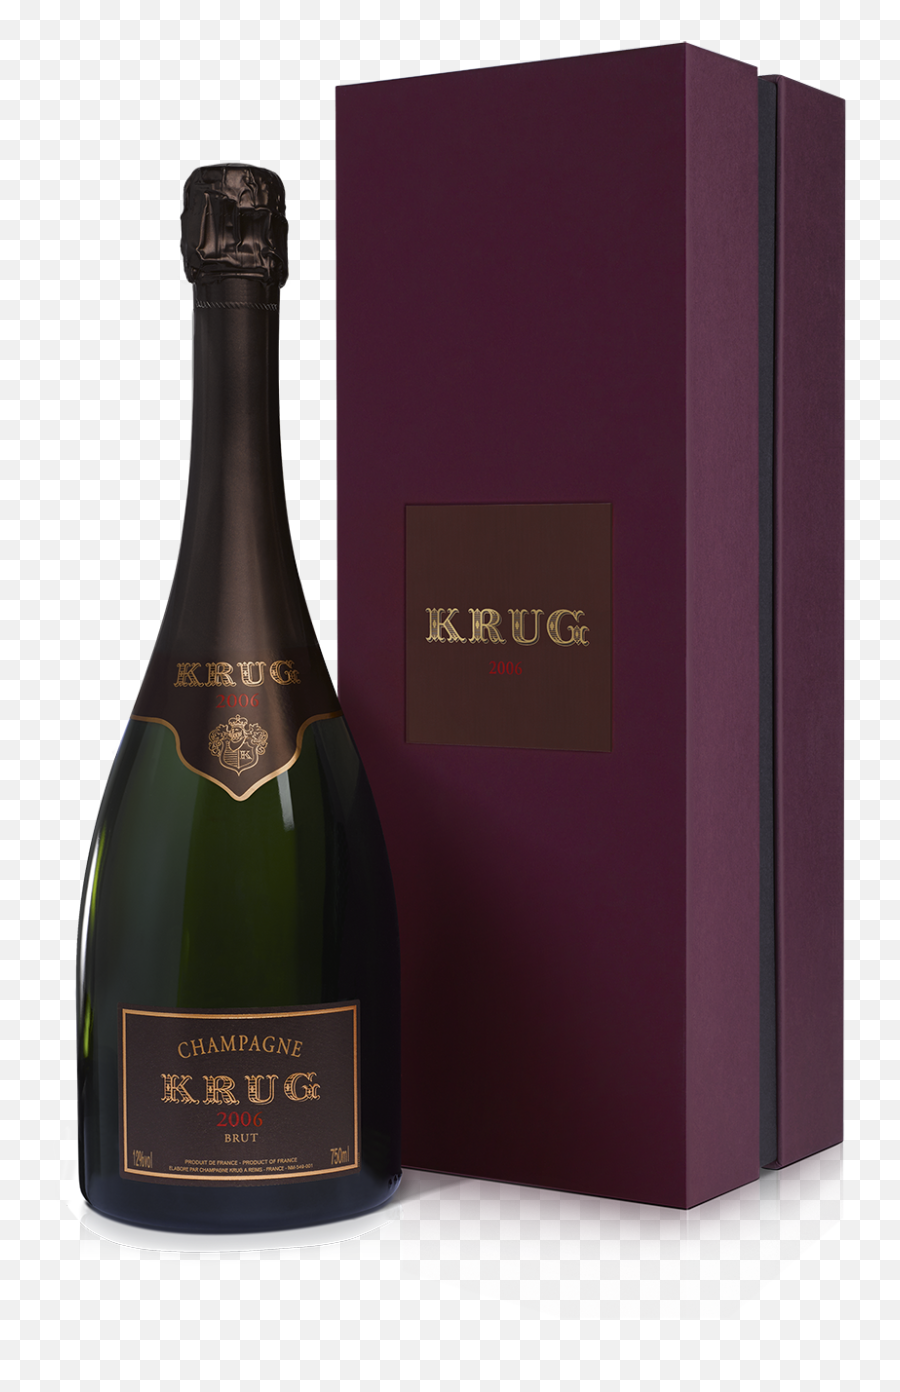 50 Best Valentineu0027s Day Gifts For Her 2021 - Romantic Gifts Champagne Krug Vintage Brut 2006 Emoji,Glass Box Of Emotion